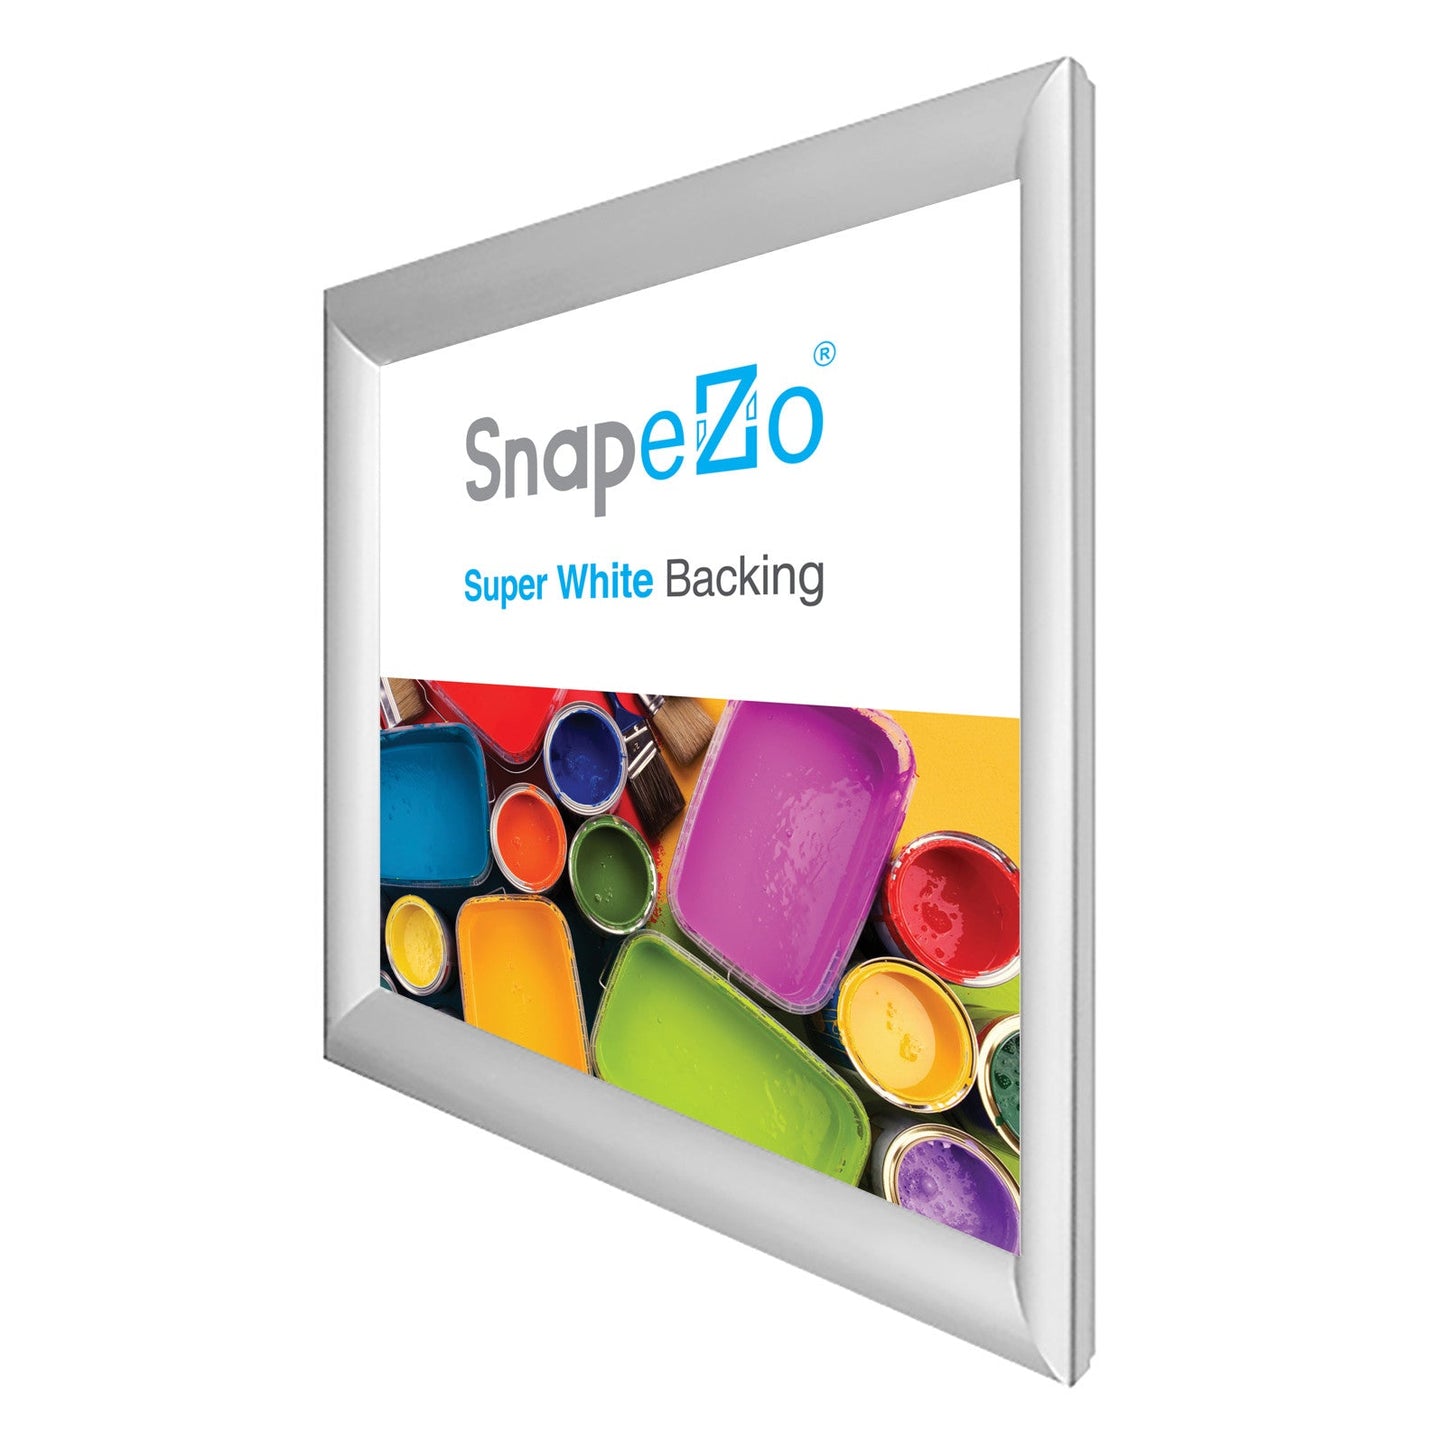 33x33 Silver SnapeZo® Snap Frame - 1.2" Profile